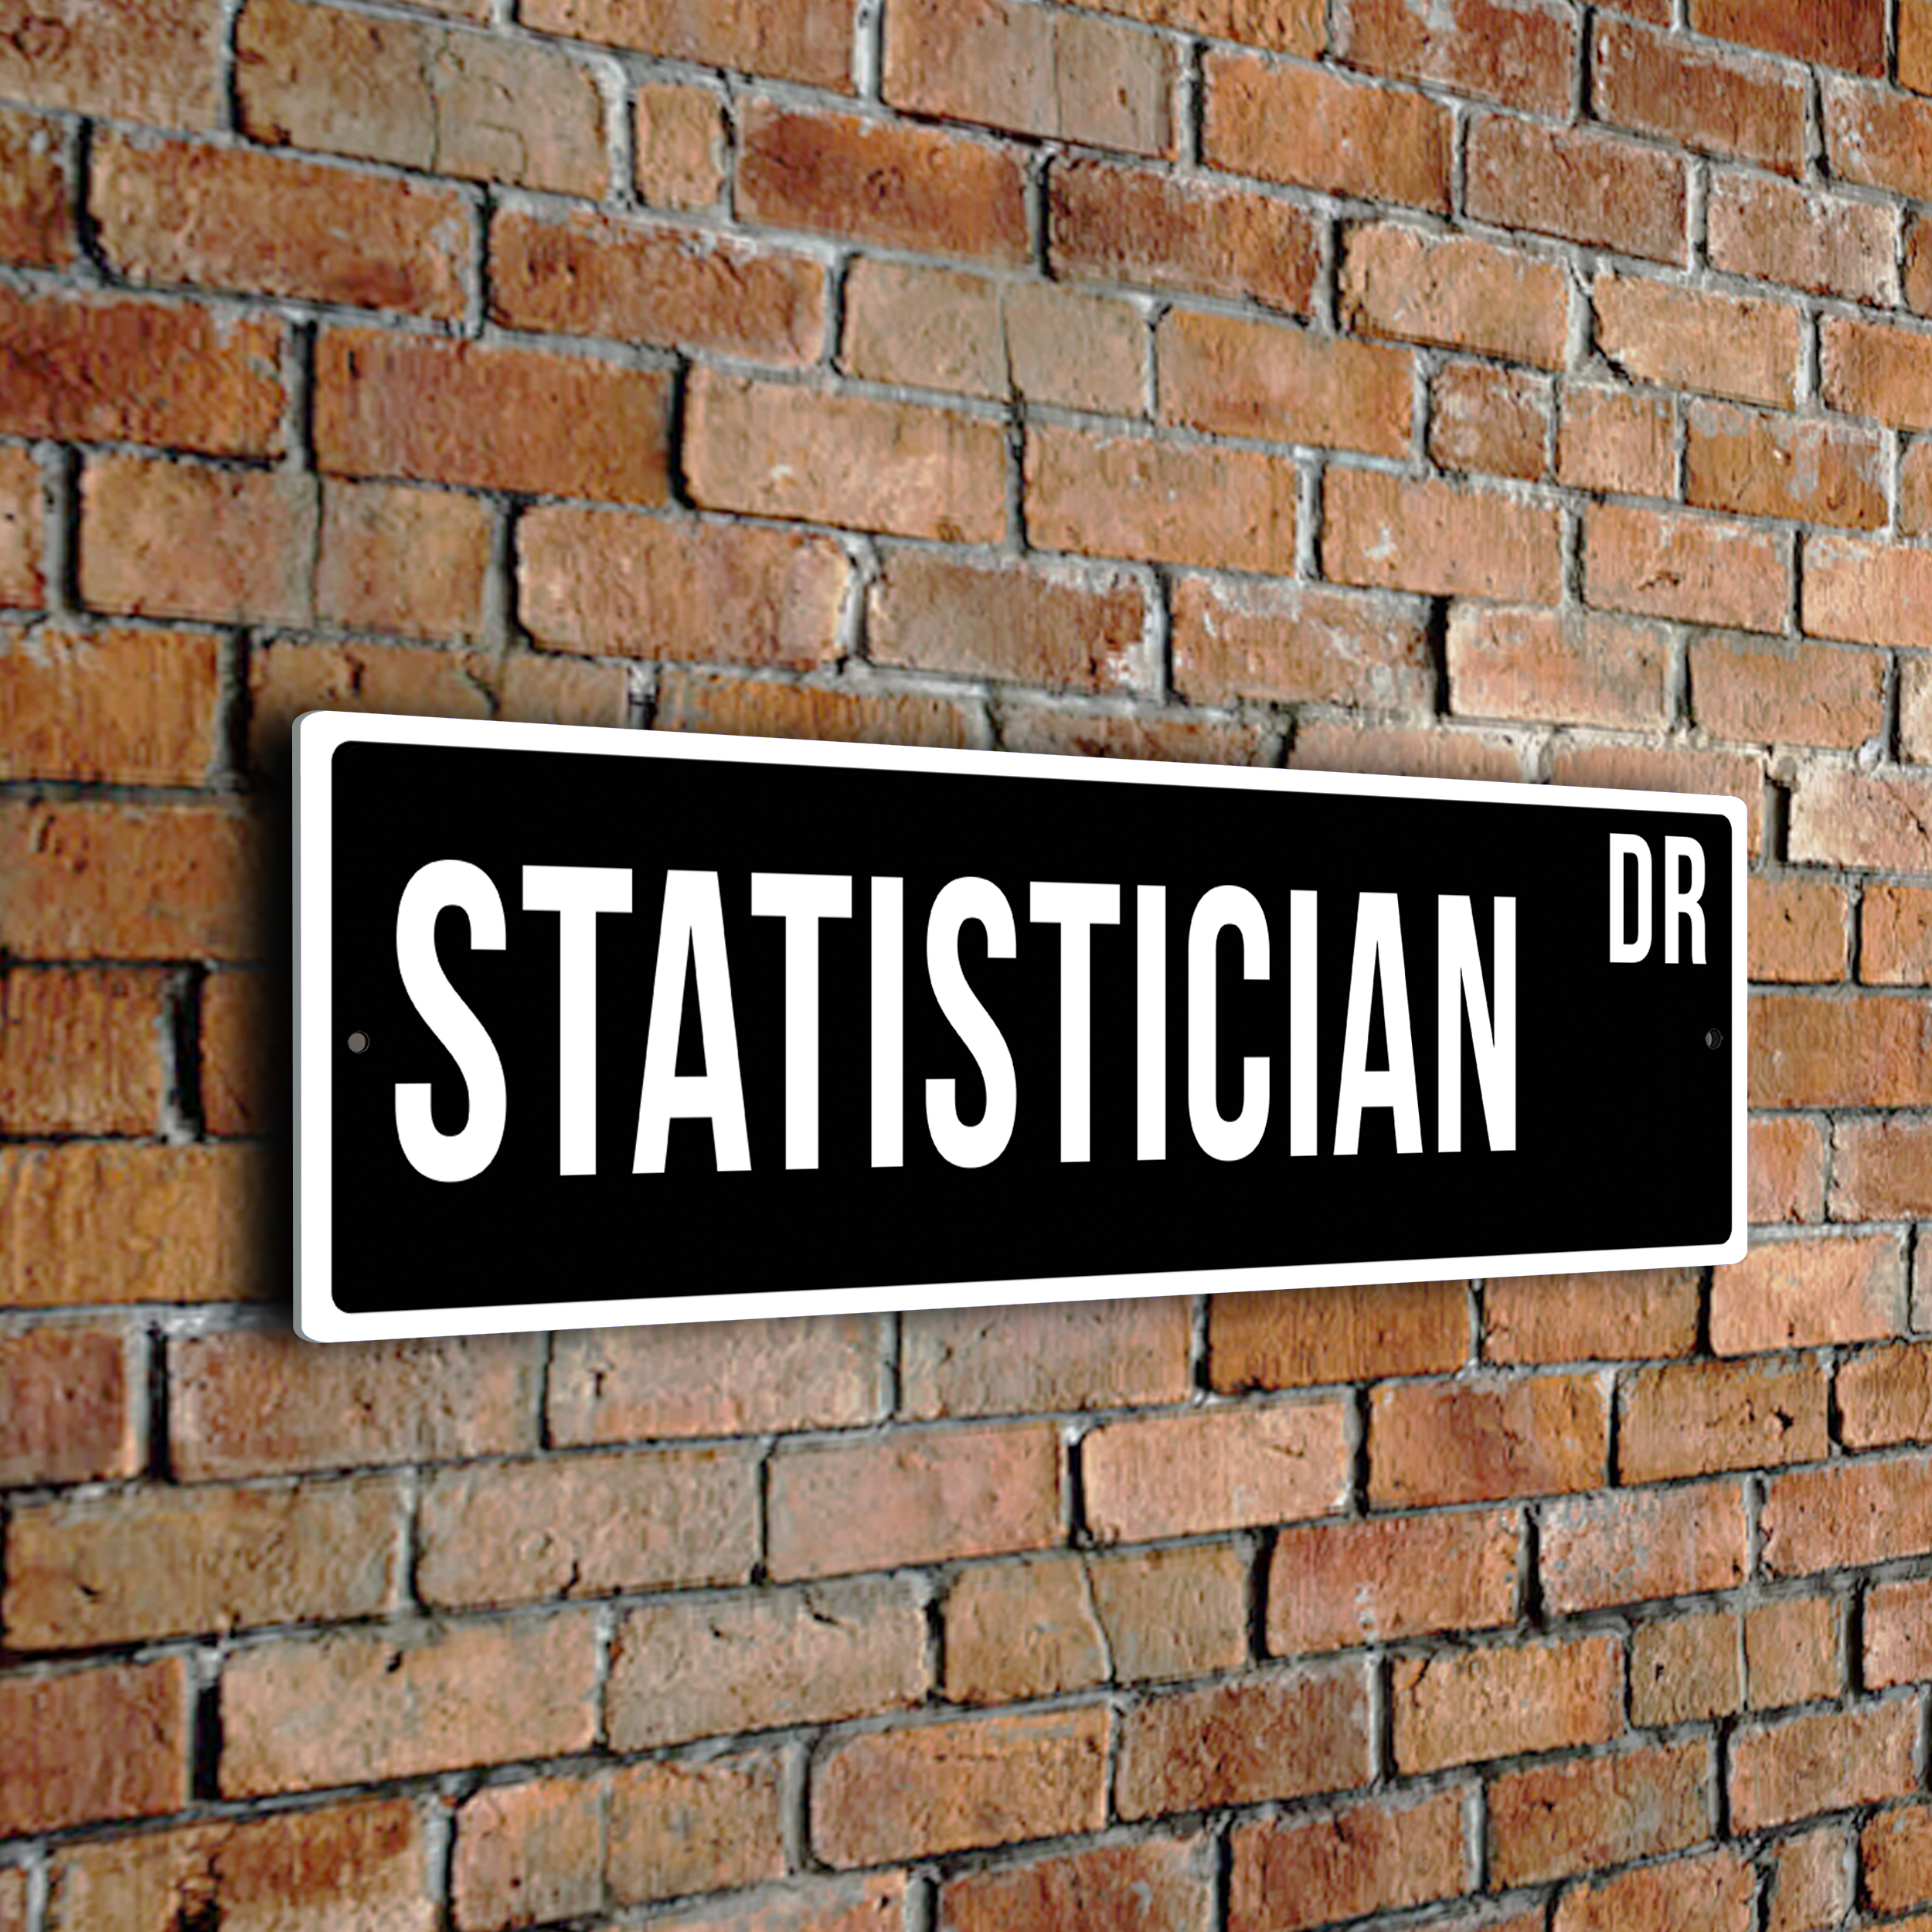 Statistician street sign